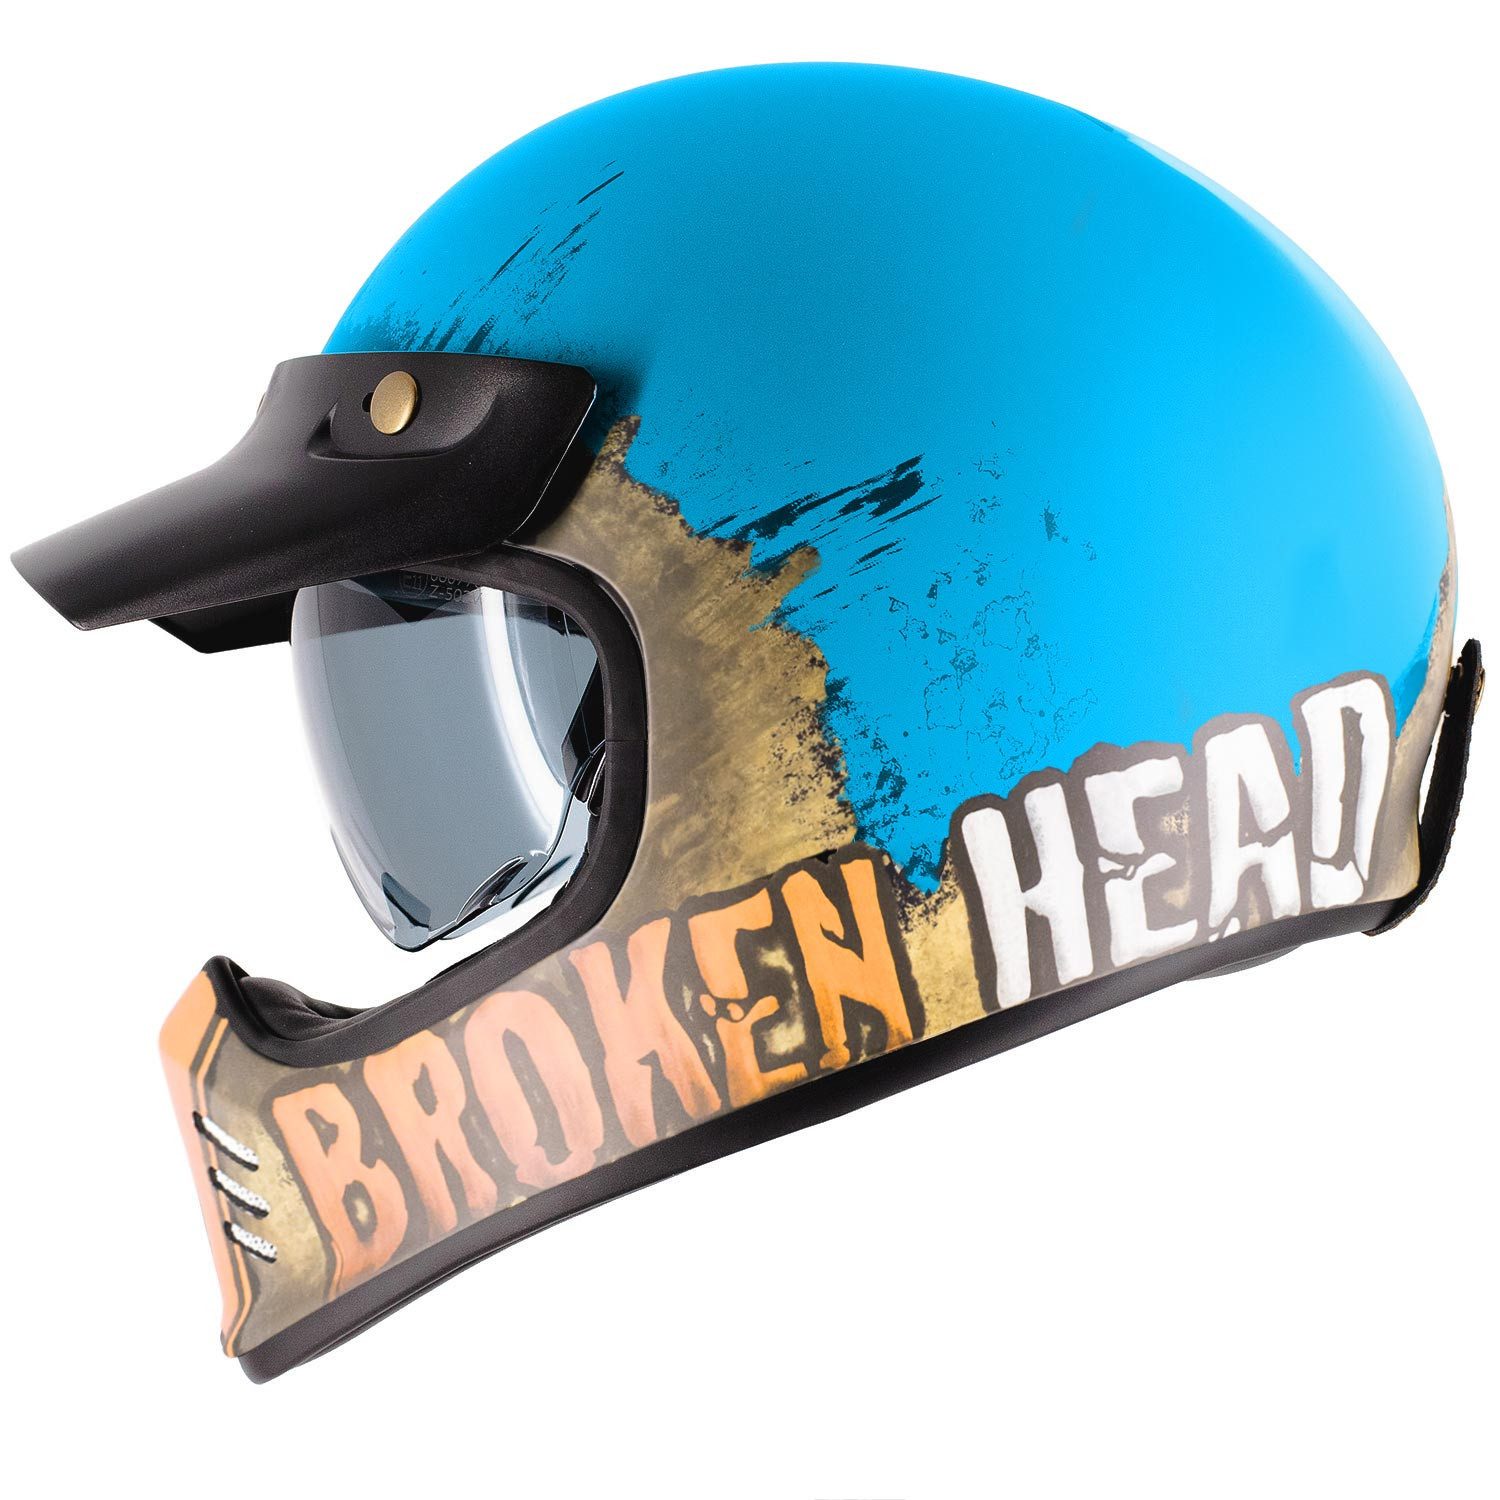 Broken Head Motocrosshelm Rusty Rider Blau-Orange, Old-School Optik